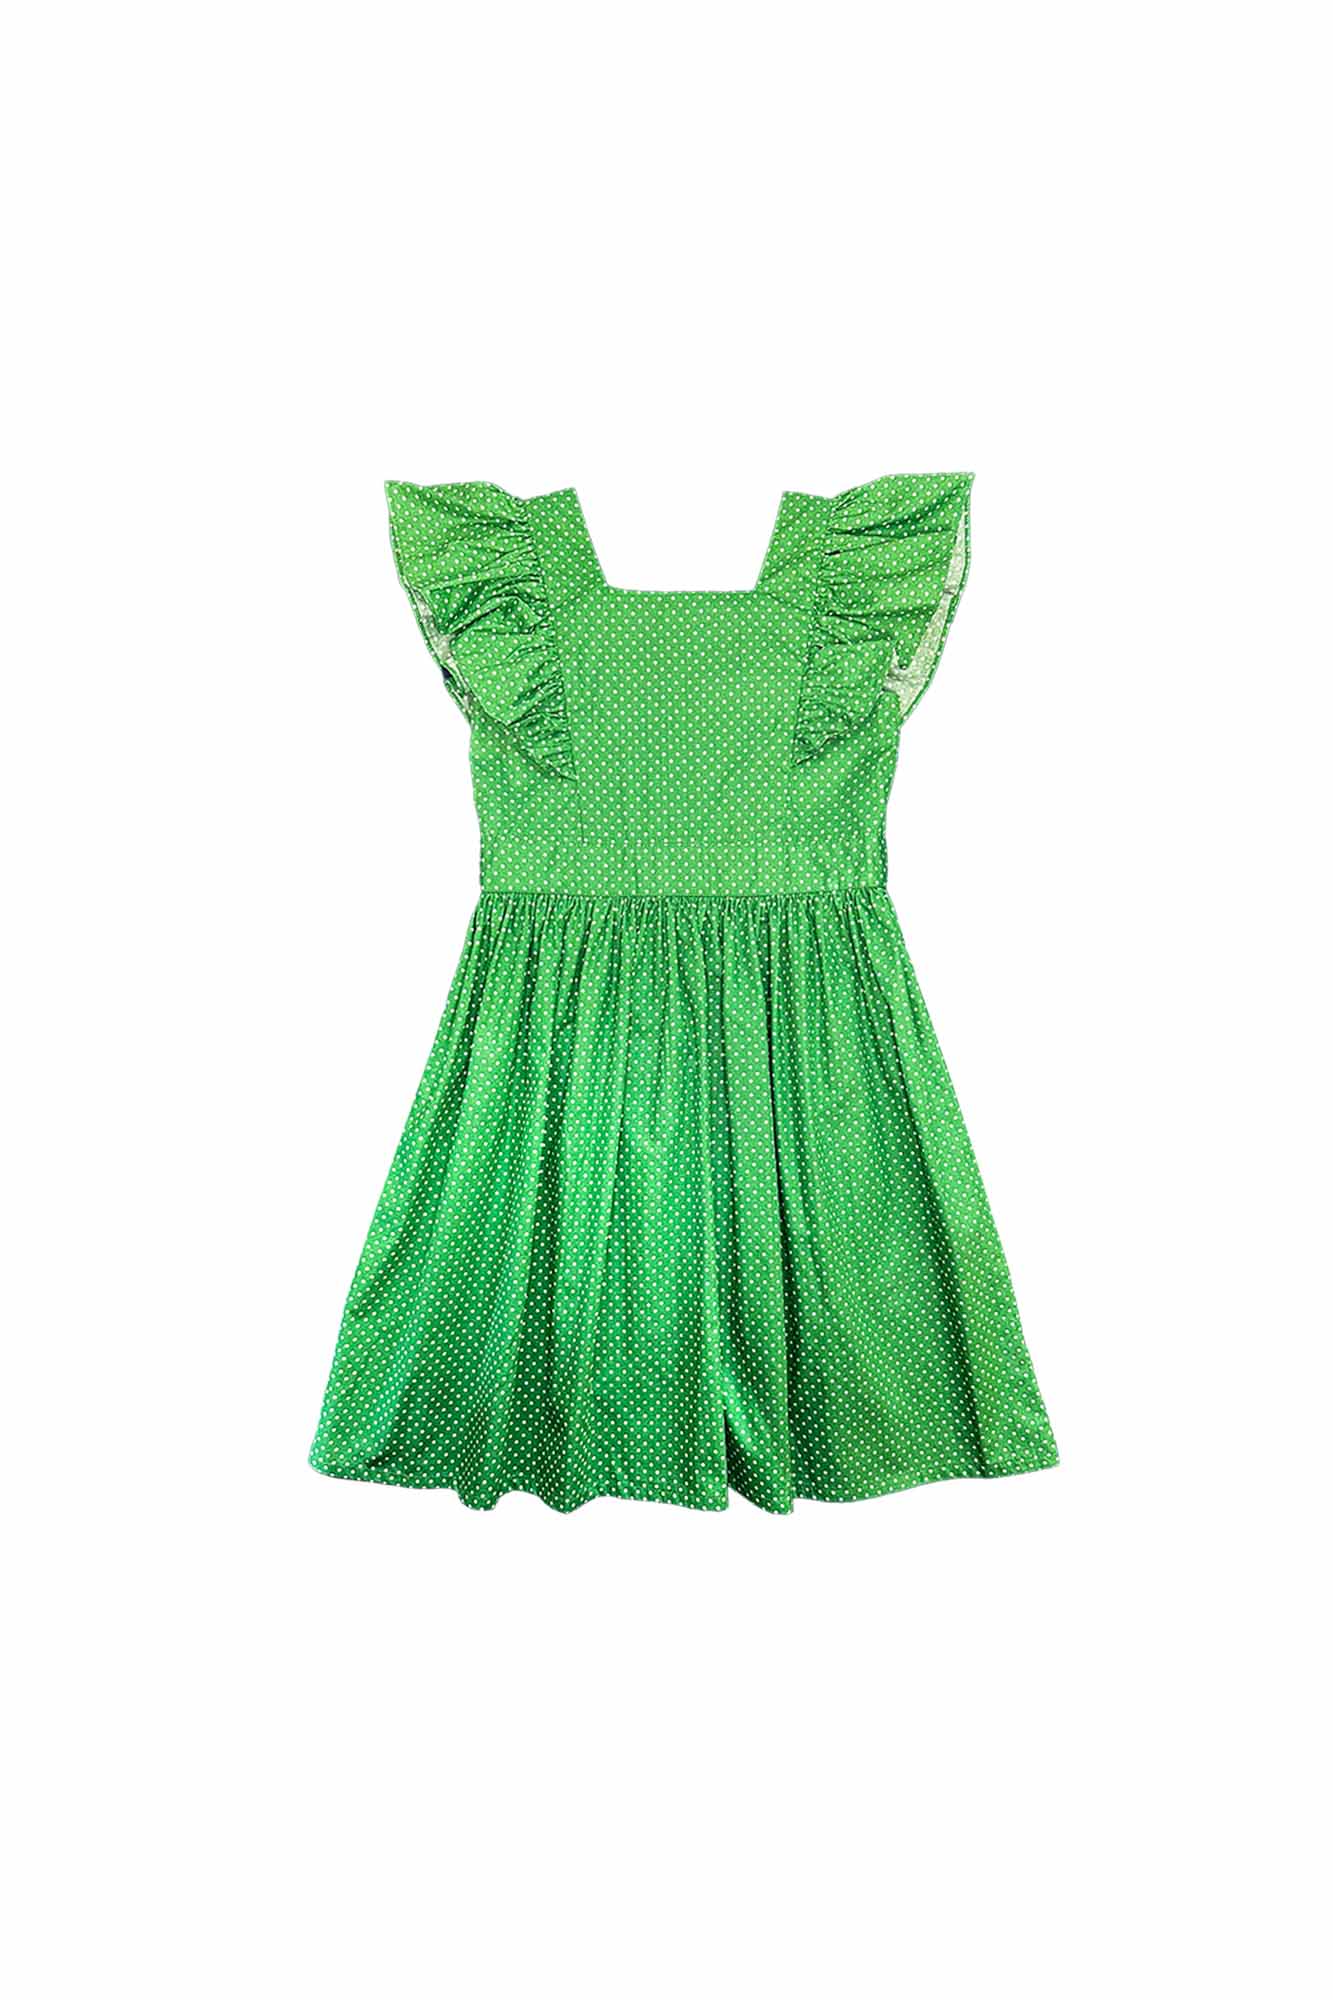 Green Polka Dot Amanda Dress